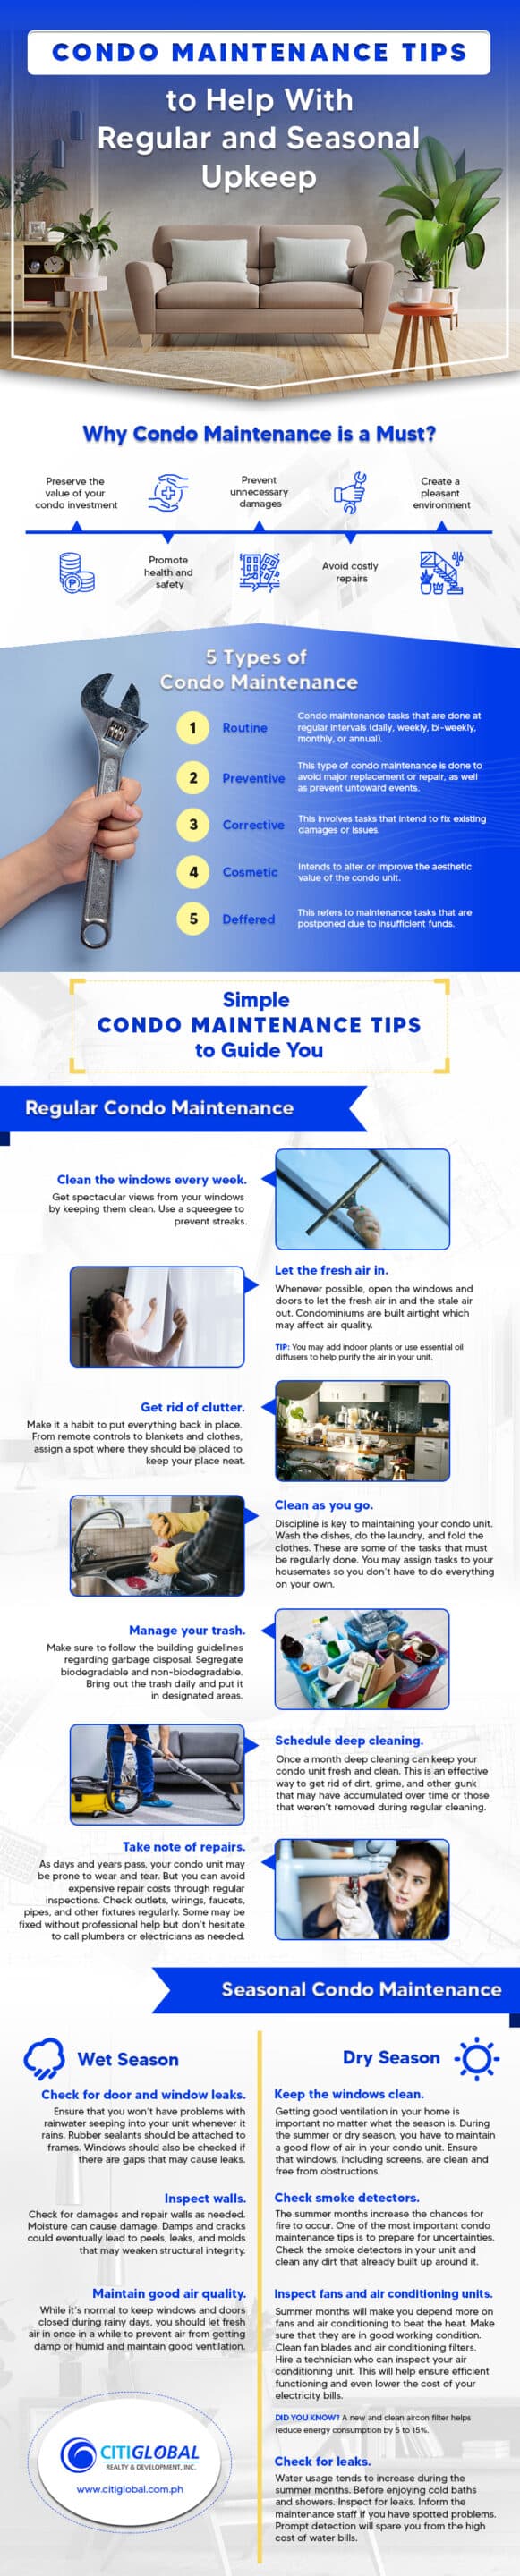 Condo Maintenance Tips to Help with Regular and Seasonal Upkeep